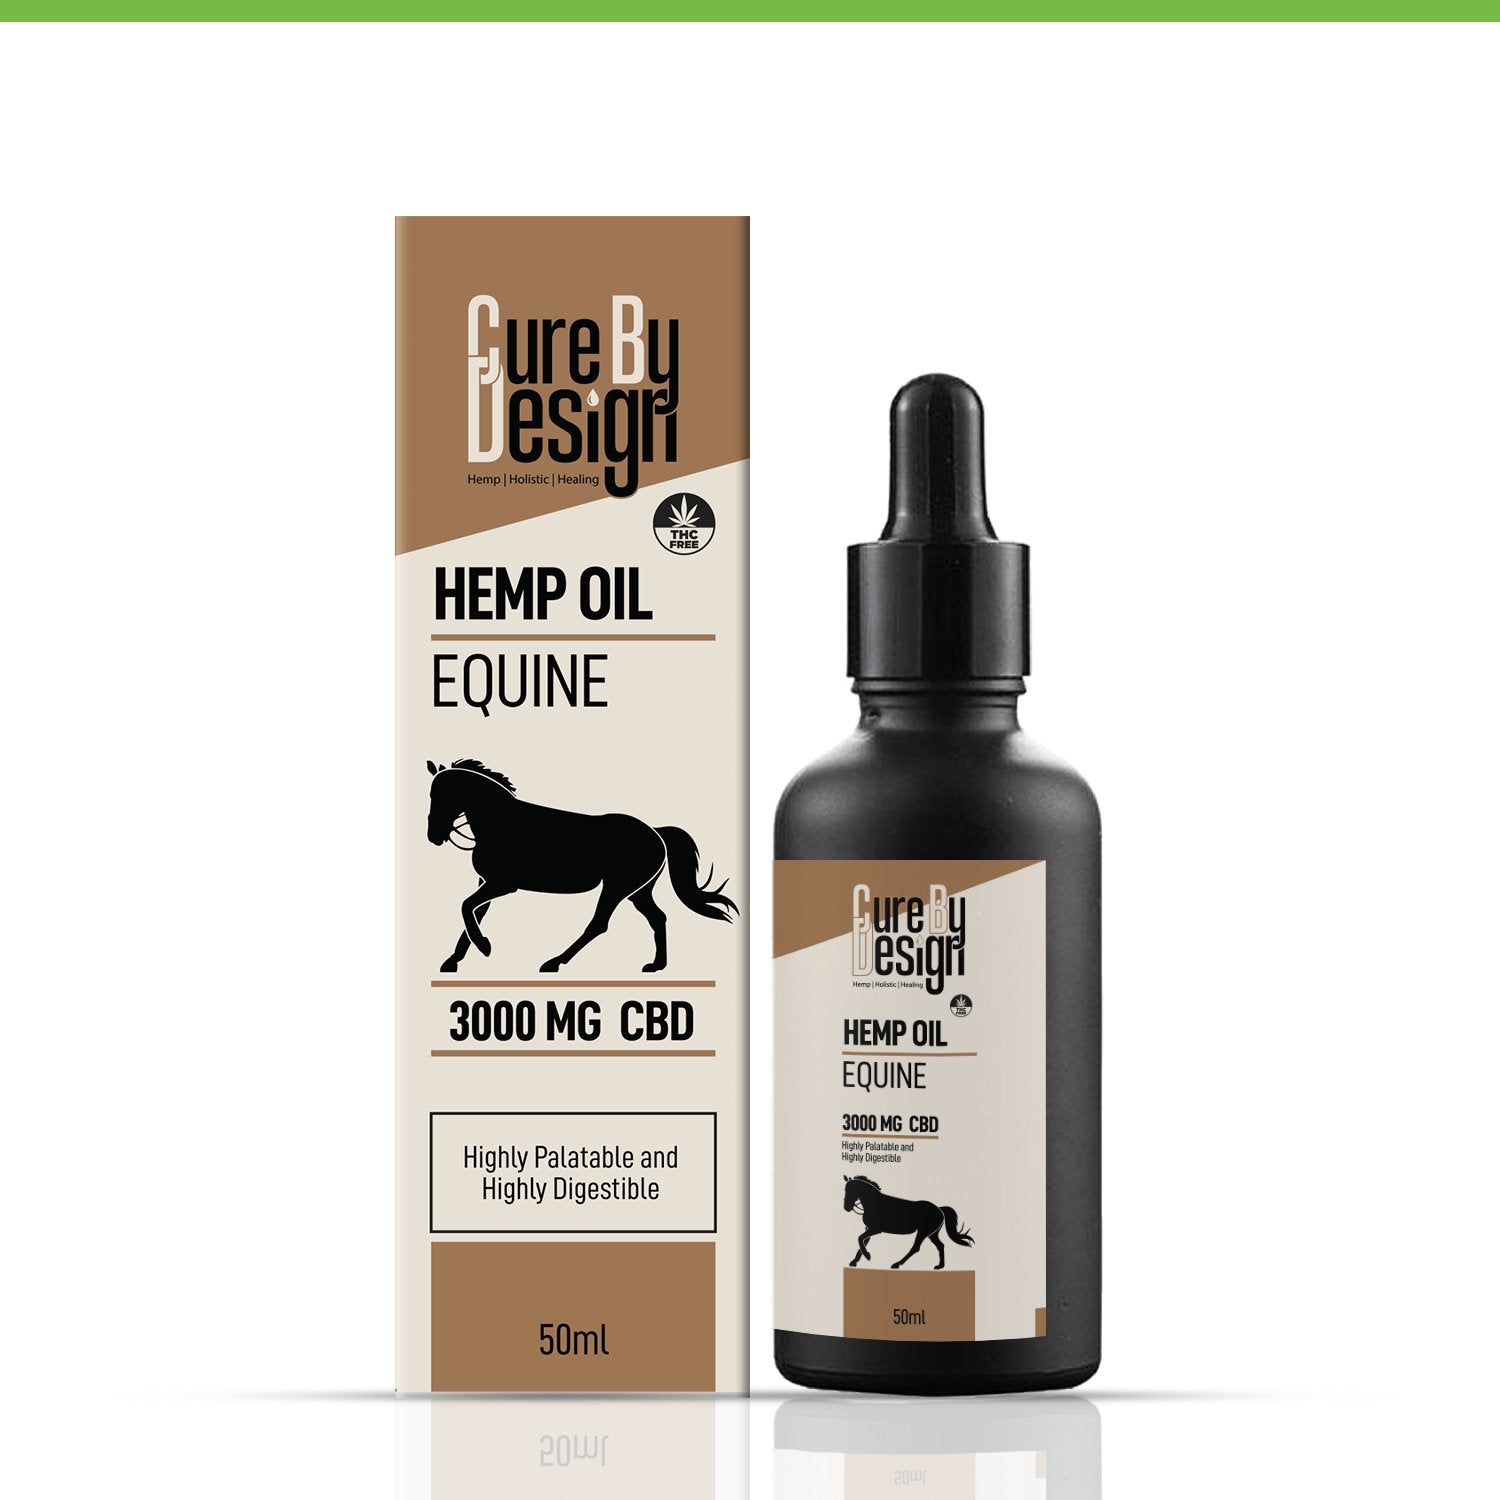 Cure By Design Hemp Oil for Equine 3000mg CBD - CBD Store India